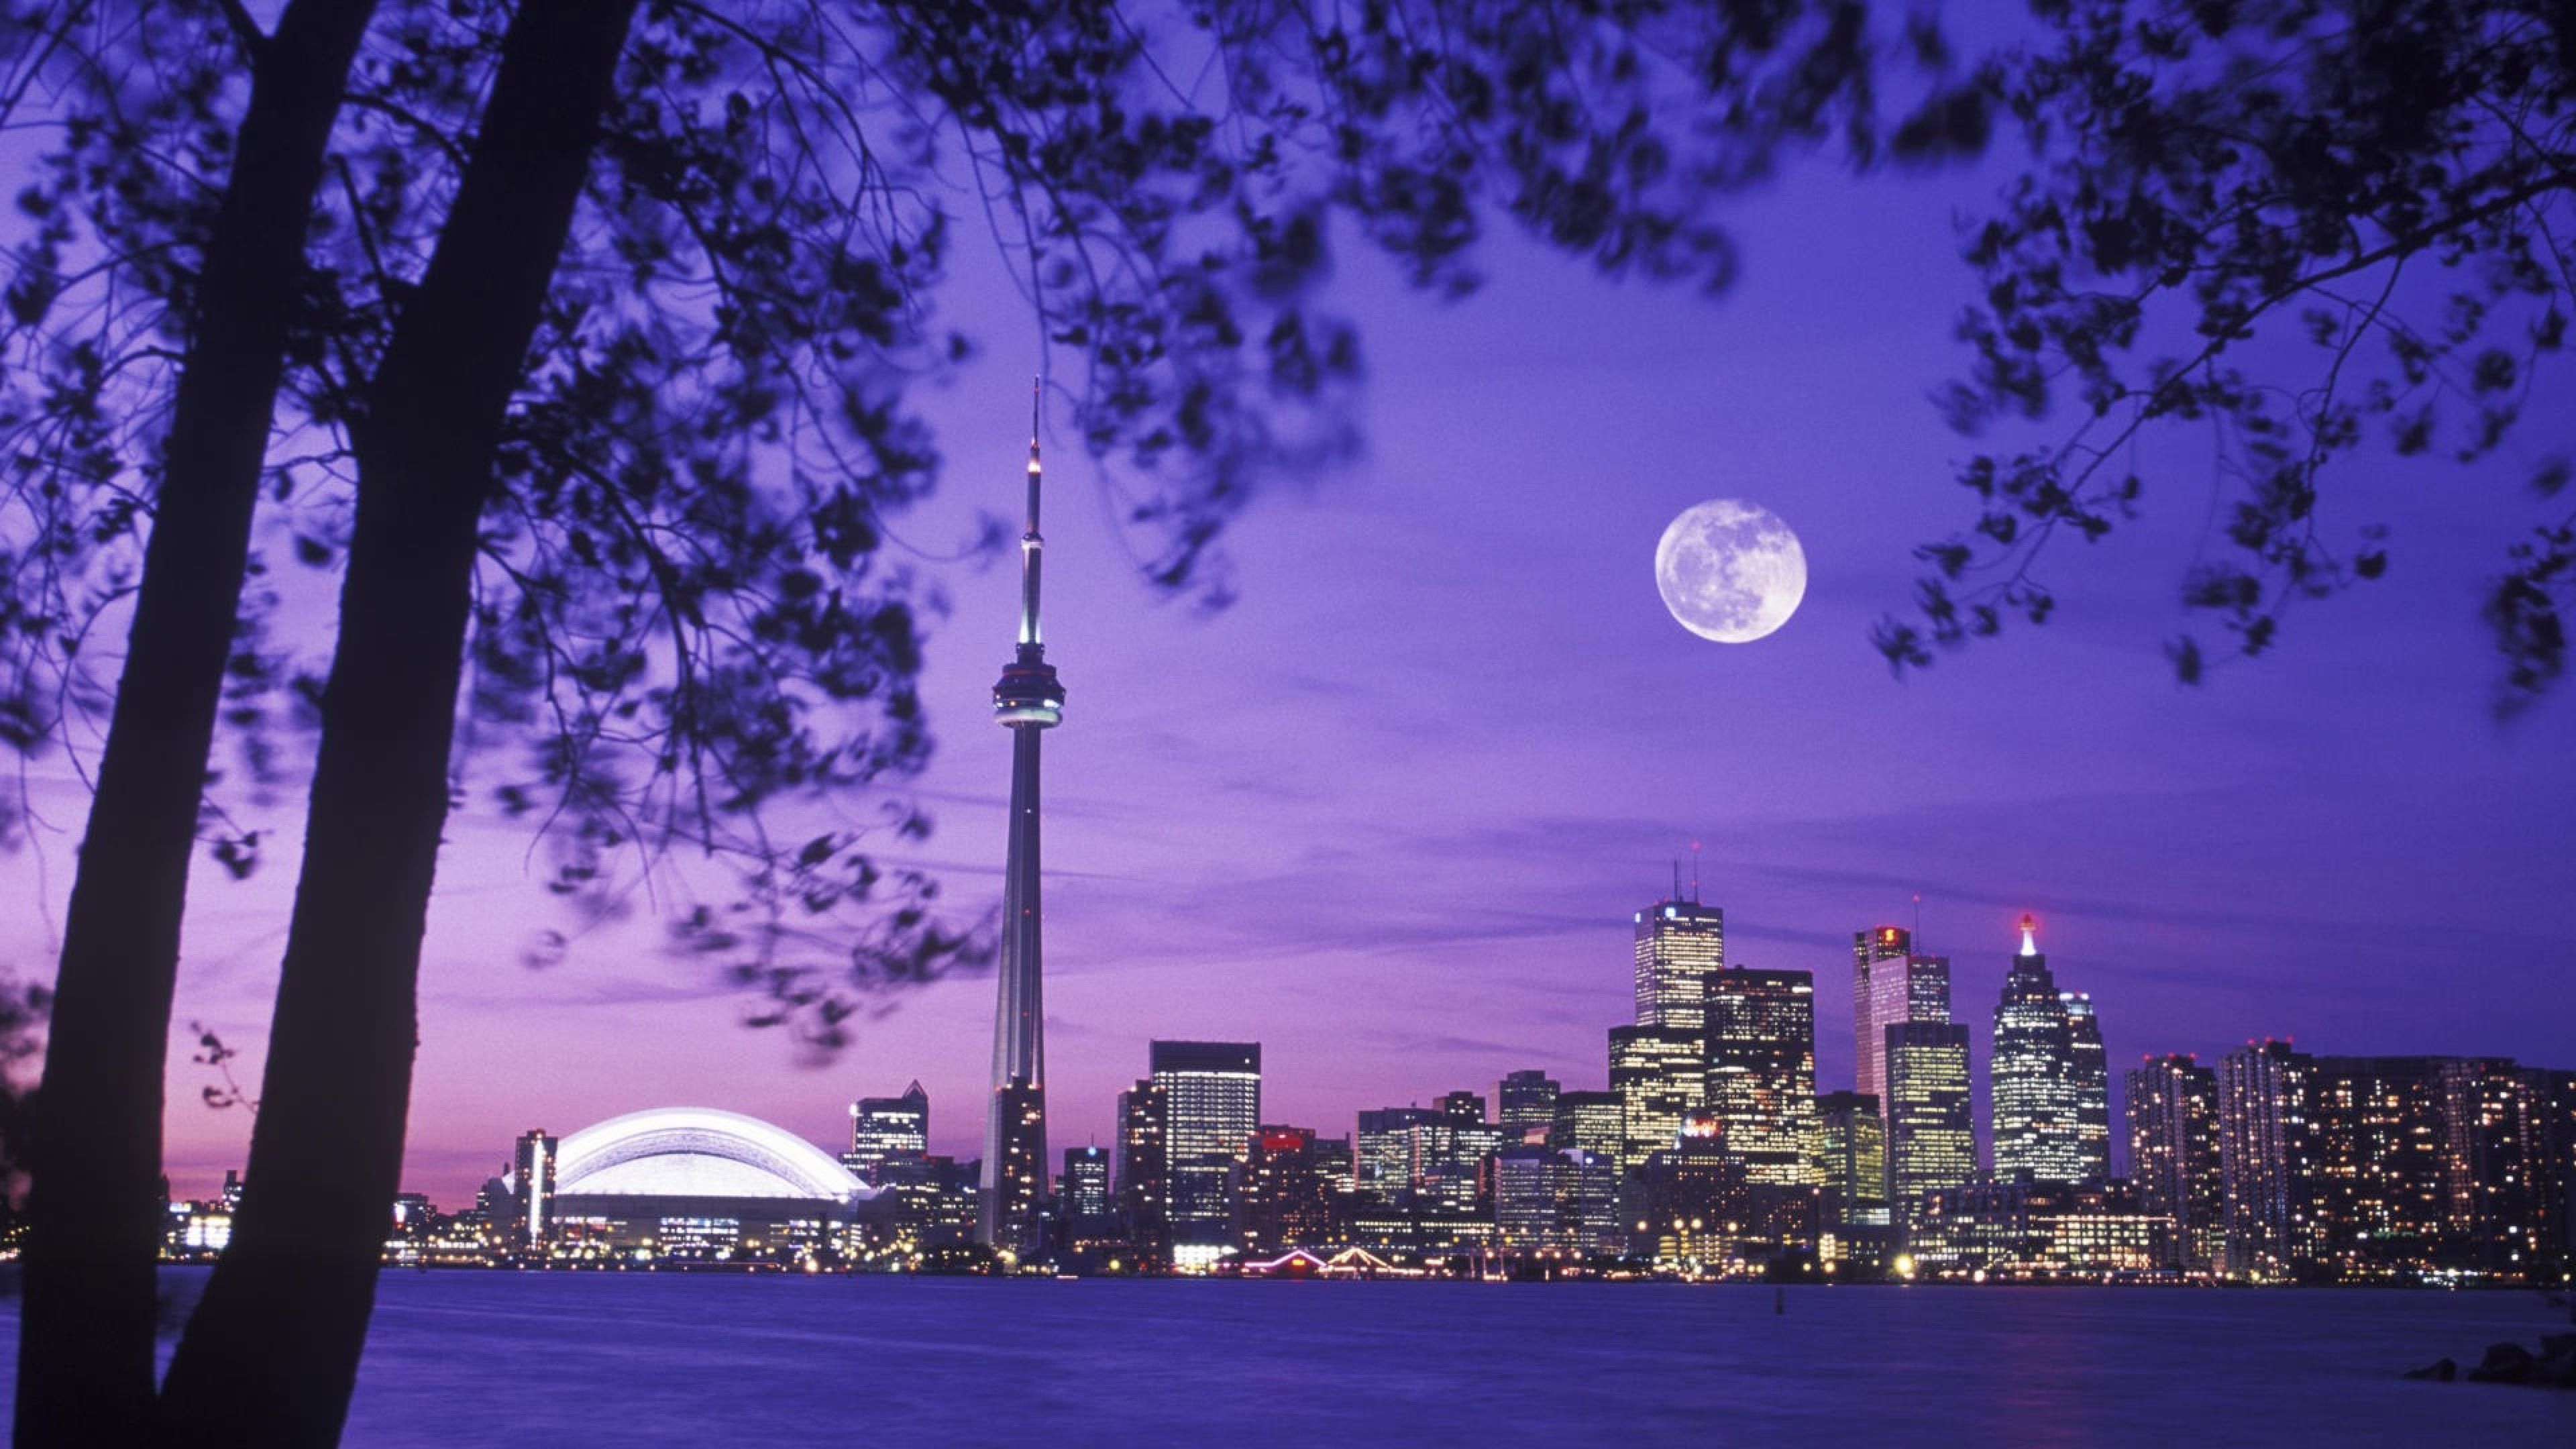 3840x2160 Hd Wallpaper Toronto Skyline Night Moon Scenery Canada 8211 Wallpaper Trend